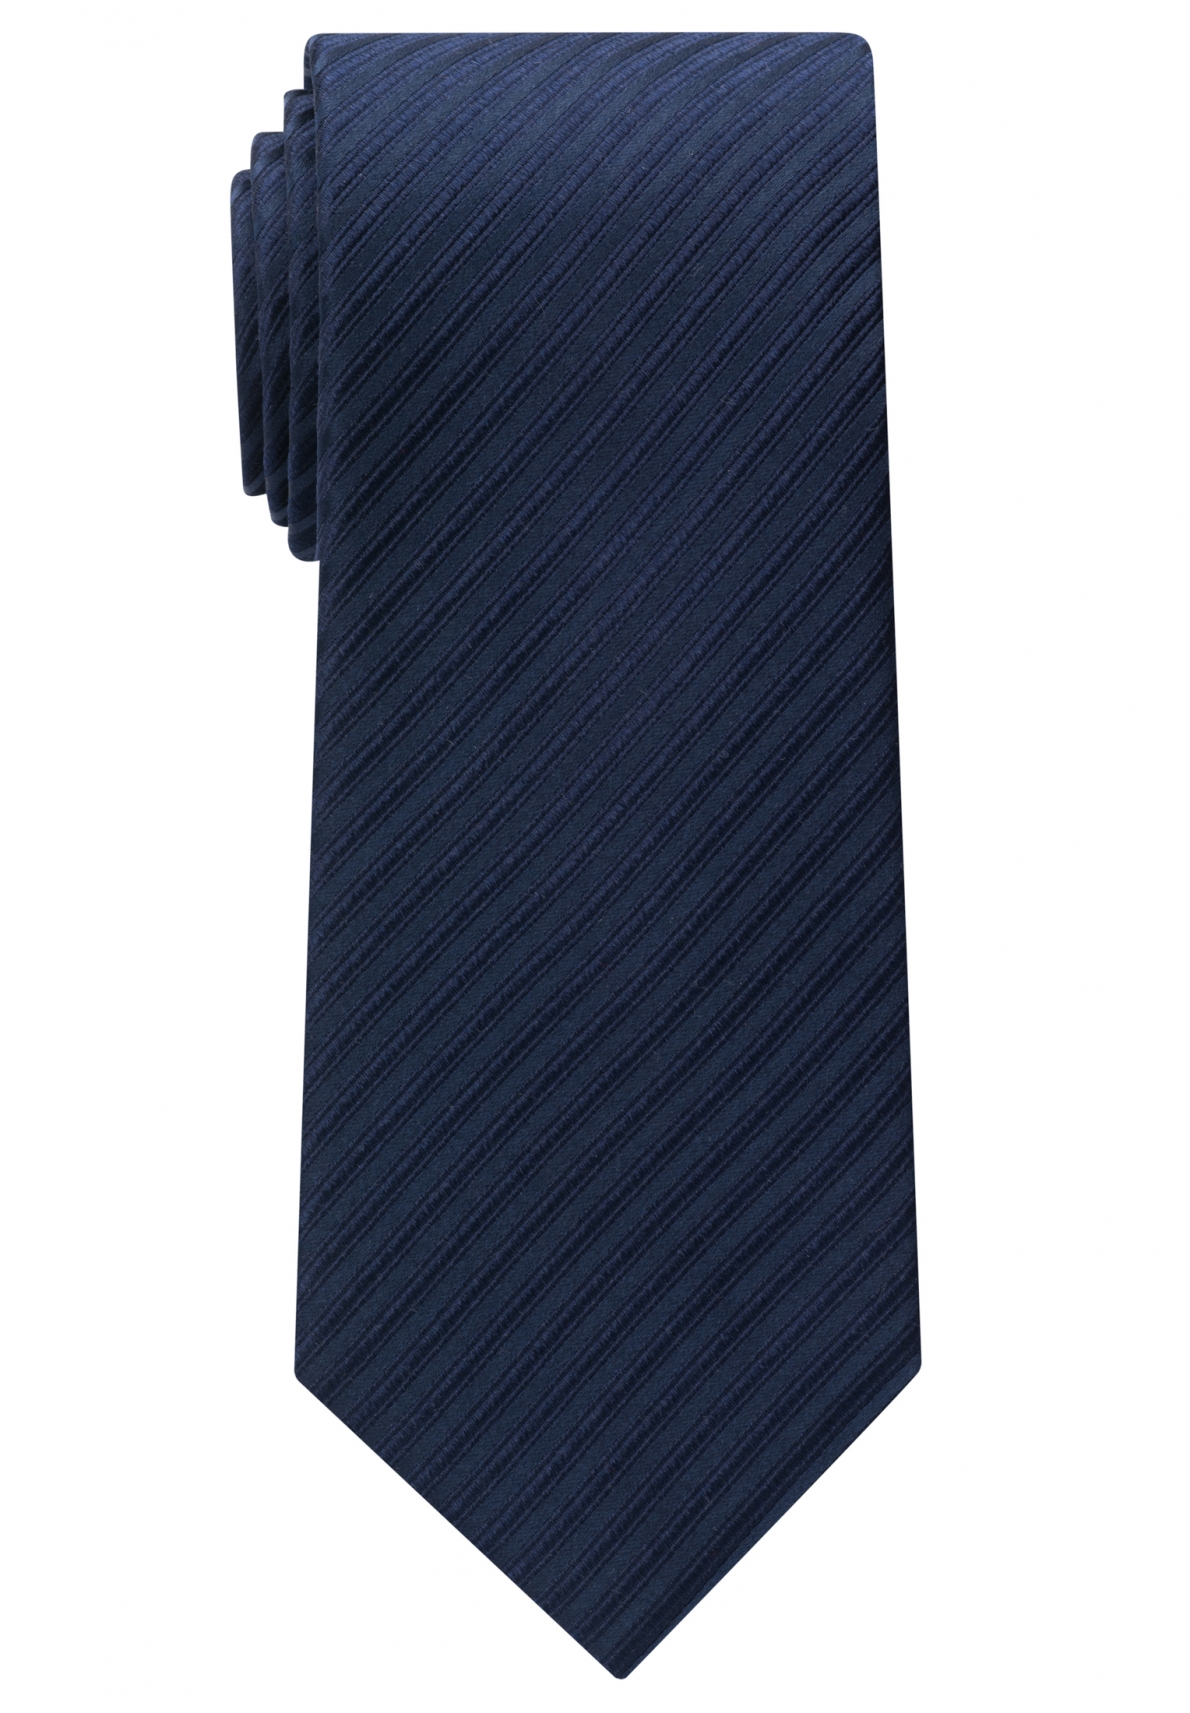 Eterna dunkelblau SPEZIALIST gestreift MODE Krawatte | 9716-19